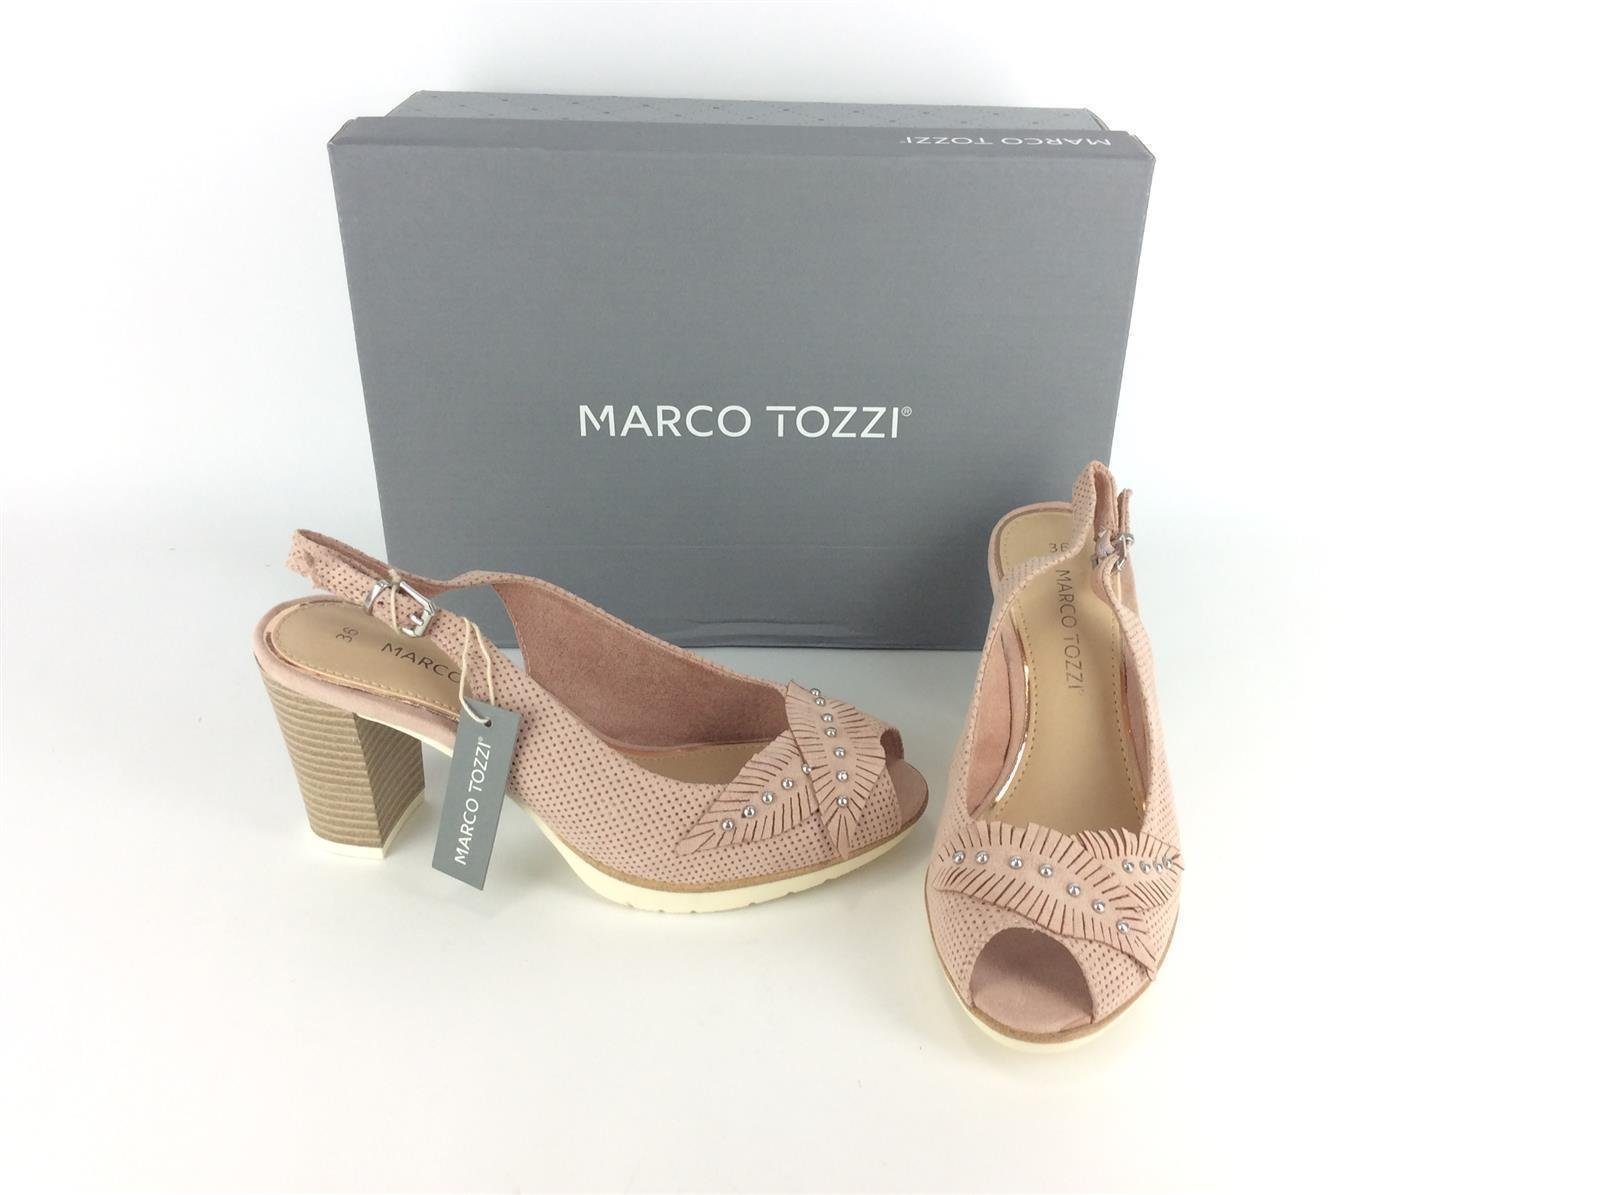 MARCO TOZZI Marco Tozzi Sling Sandale Rose,6 cm Absatz Slingpumps